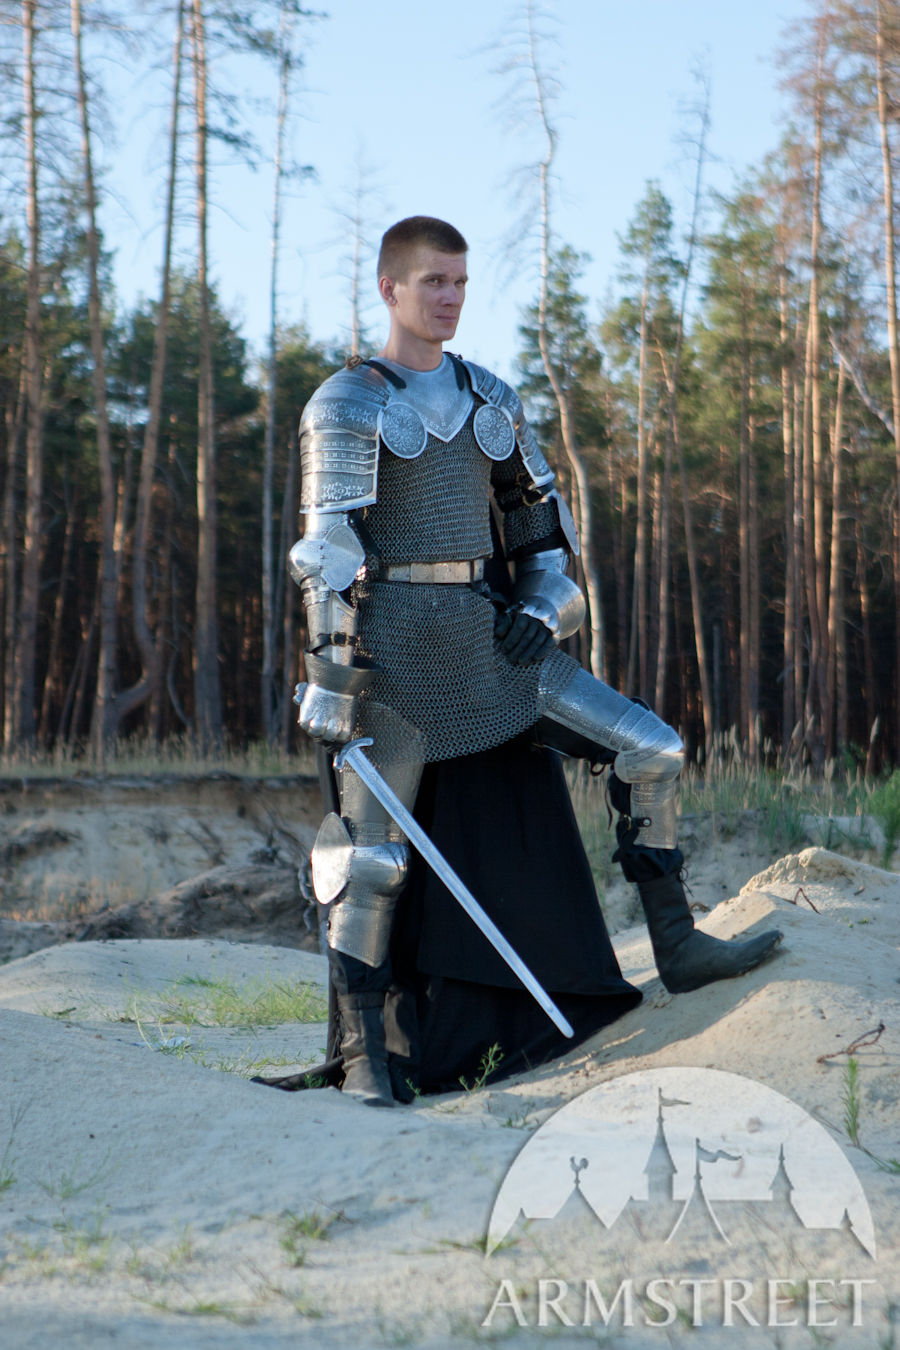 Paladin Medieval Knight Armor Suit